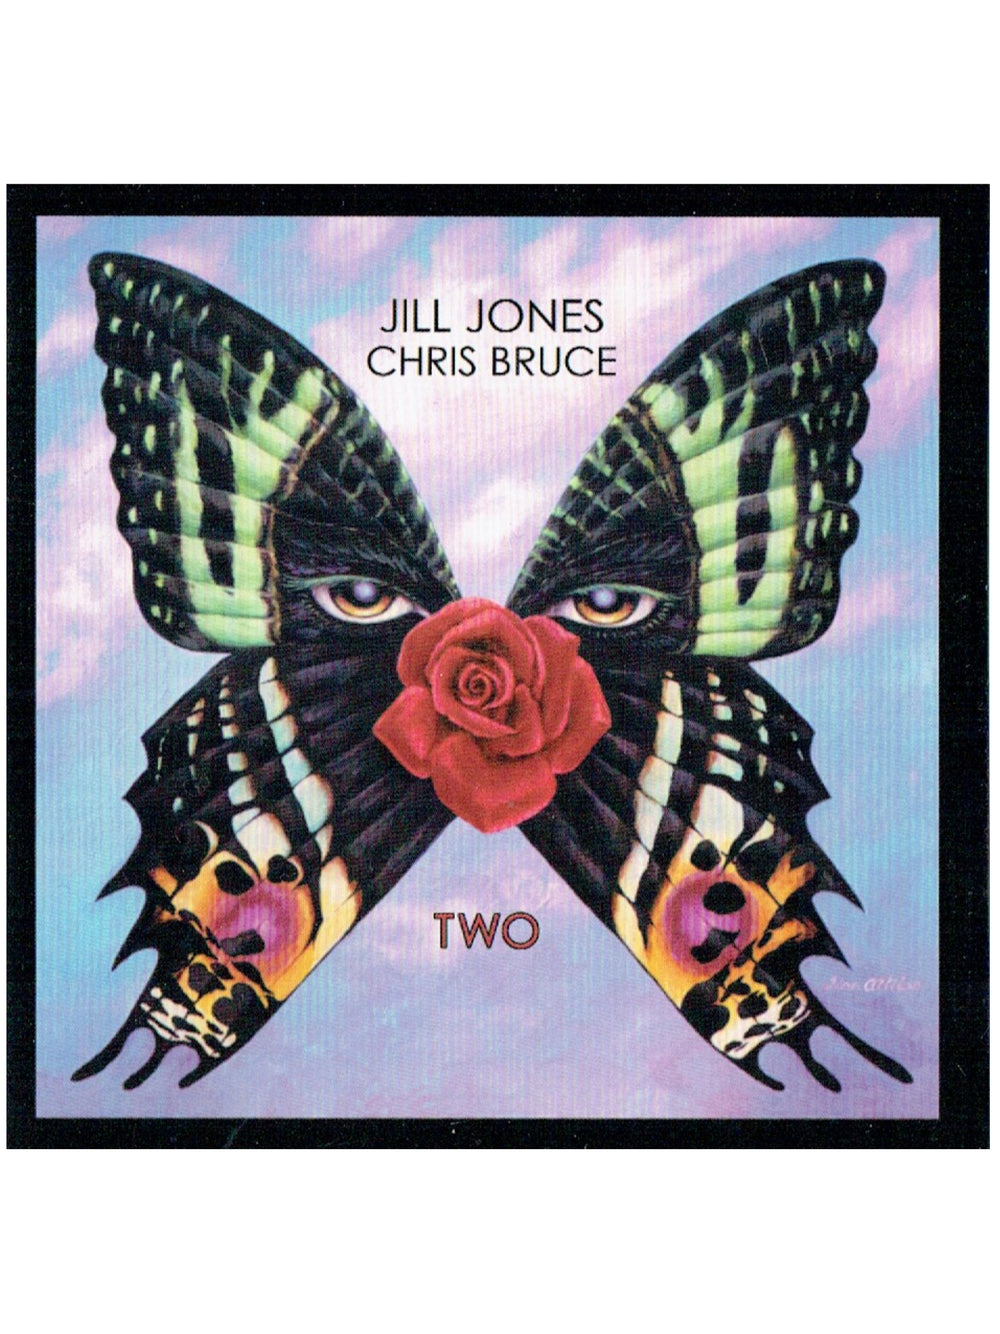 Prince – Jill Jones Chris Bruce TWO CD Album Very Rare USA Release Prince